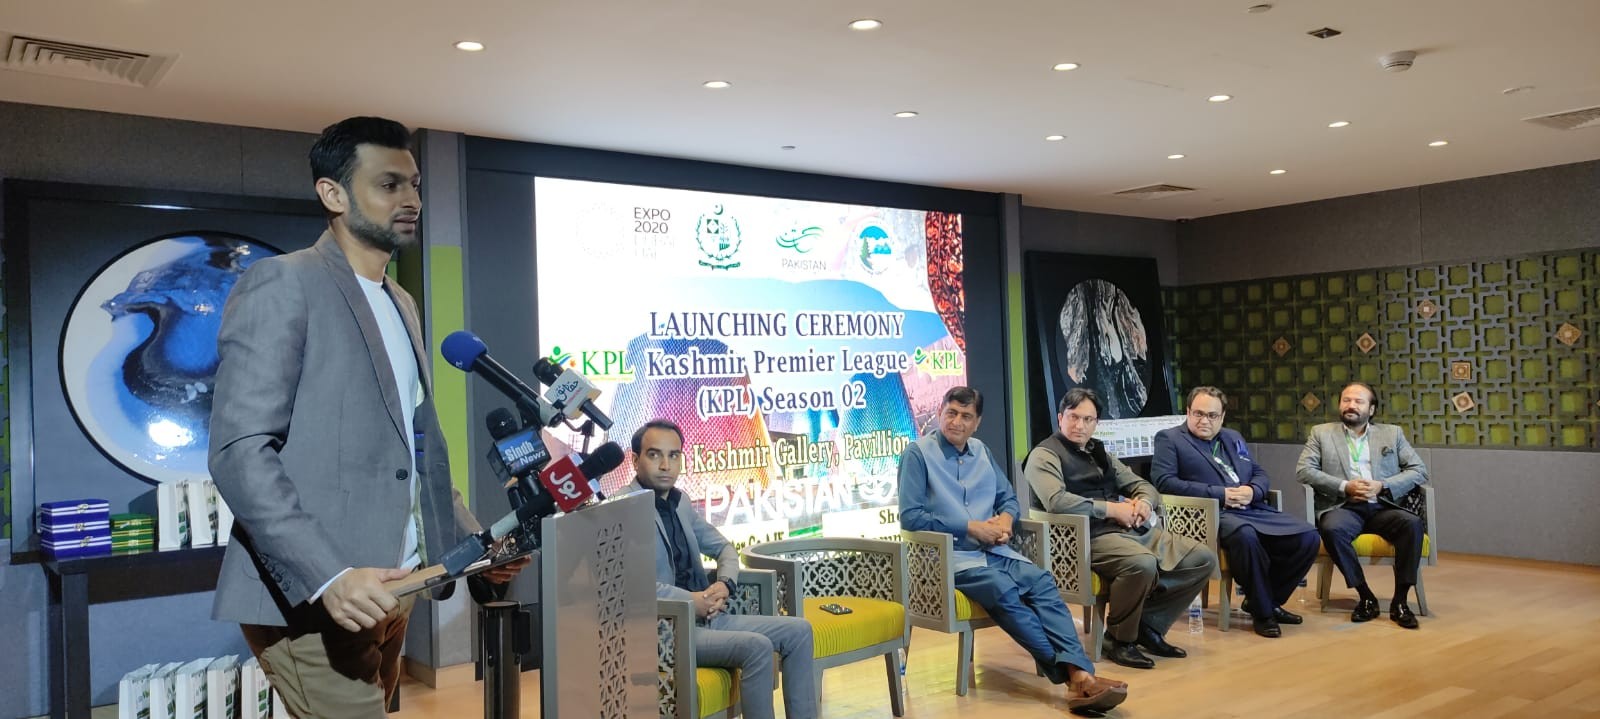 Kashmir Premier League Showcase Kicks-Off with Mega success in Expo 2020